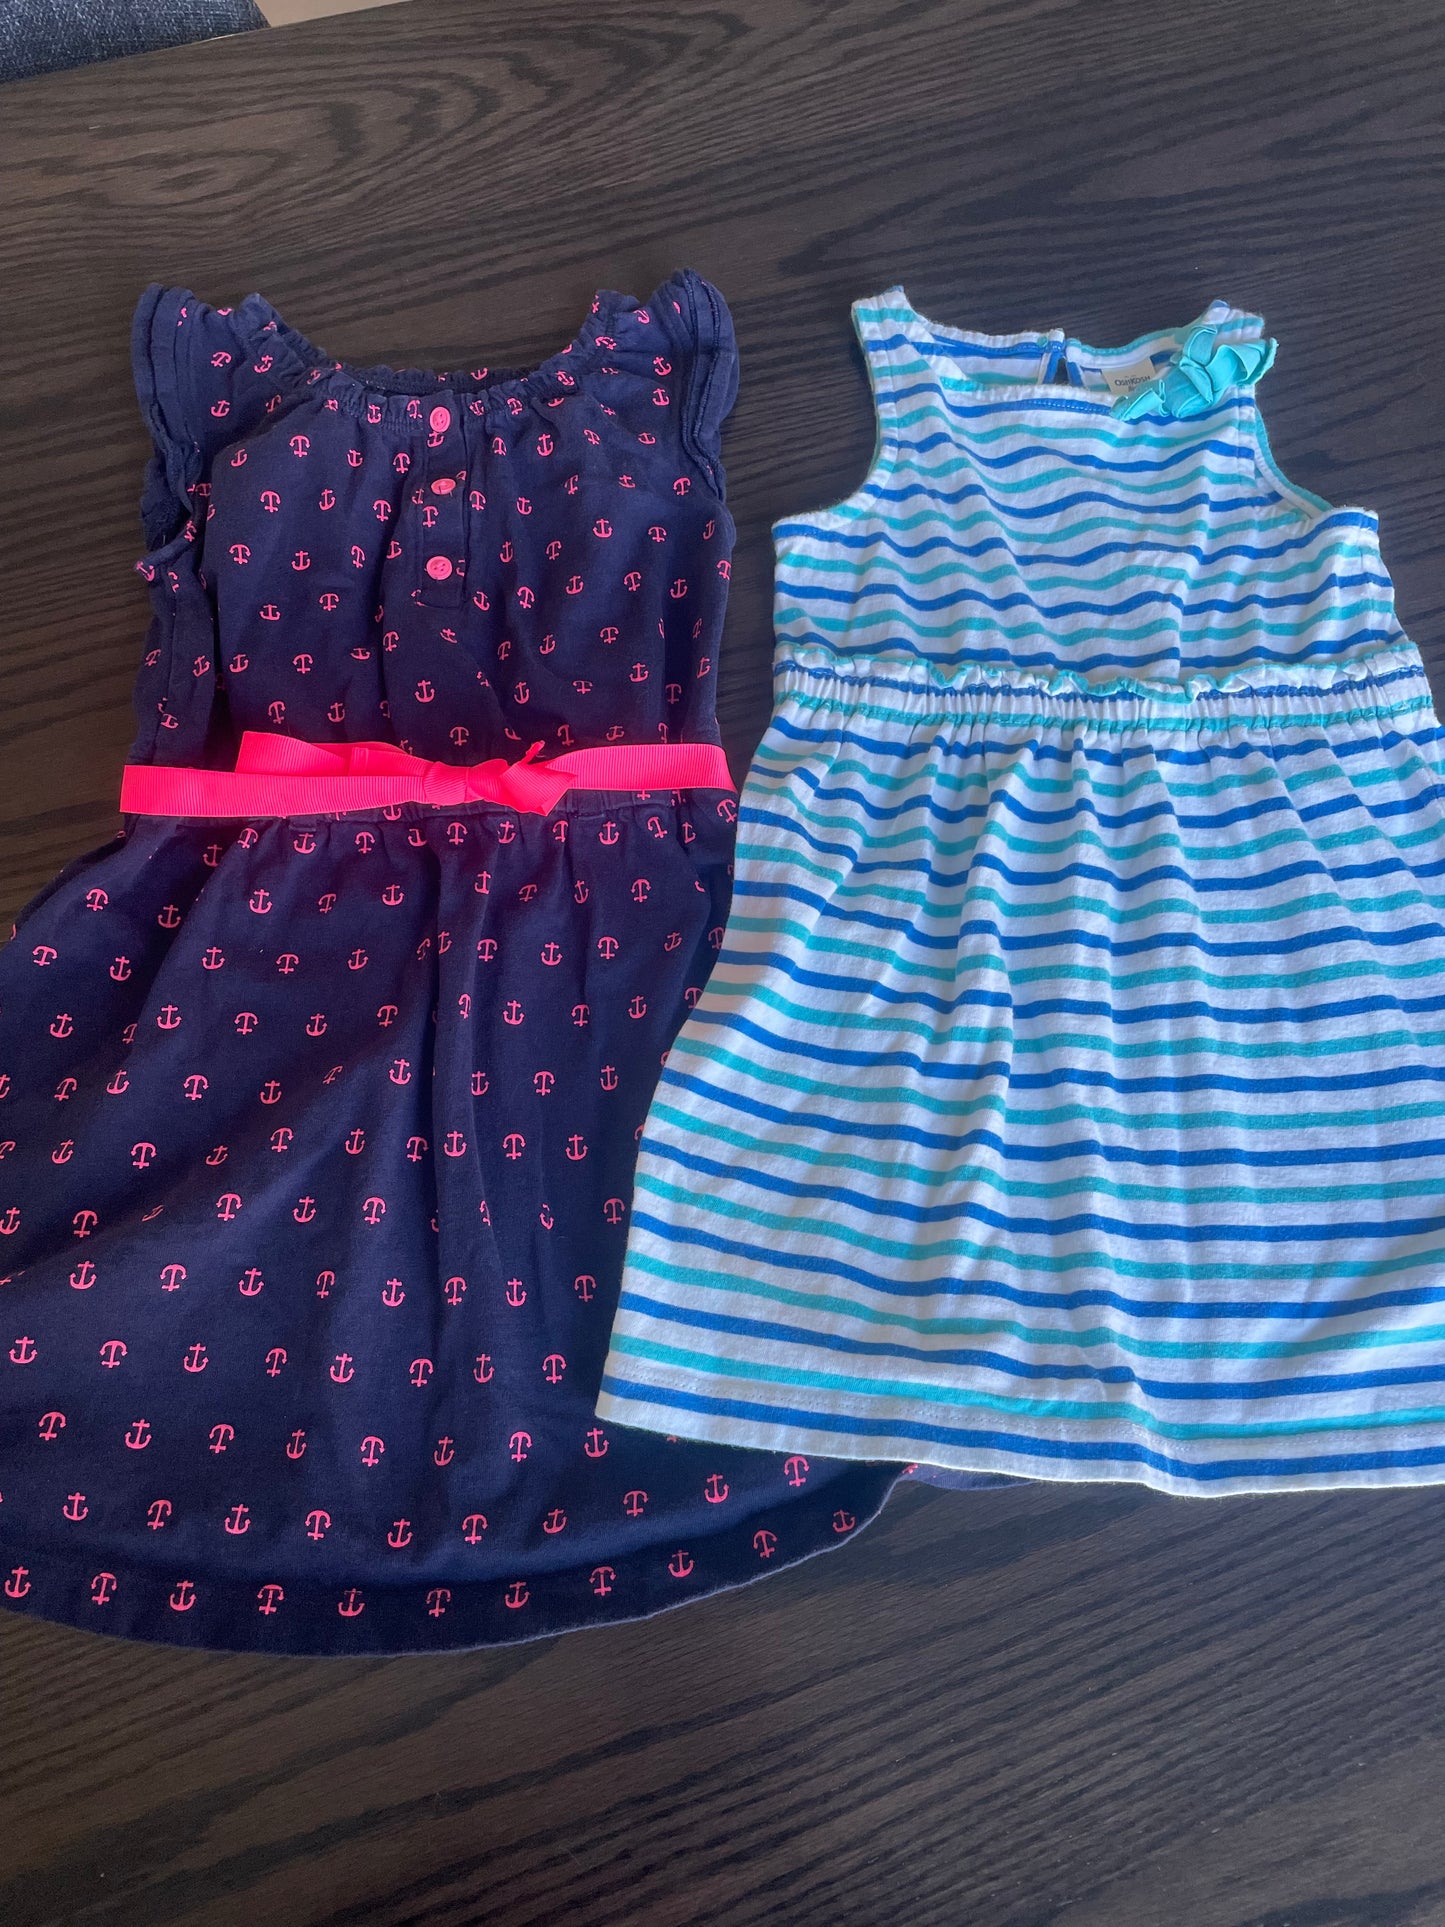 Dress Bundle - Girls Size 4T - Carters Anchor Dress & Osh Kosh Stripe Dress